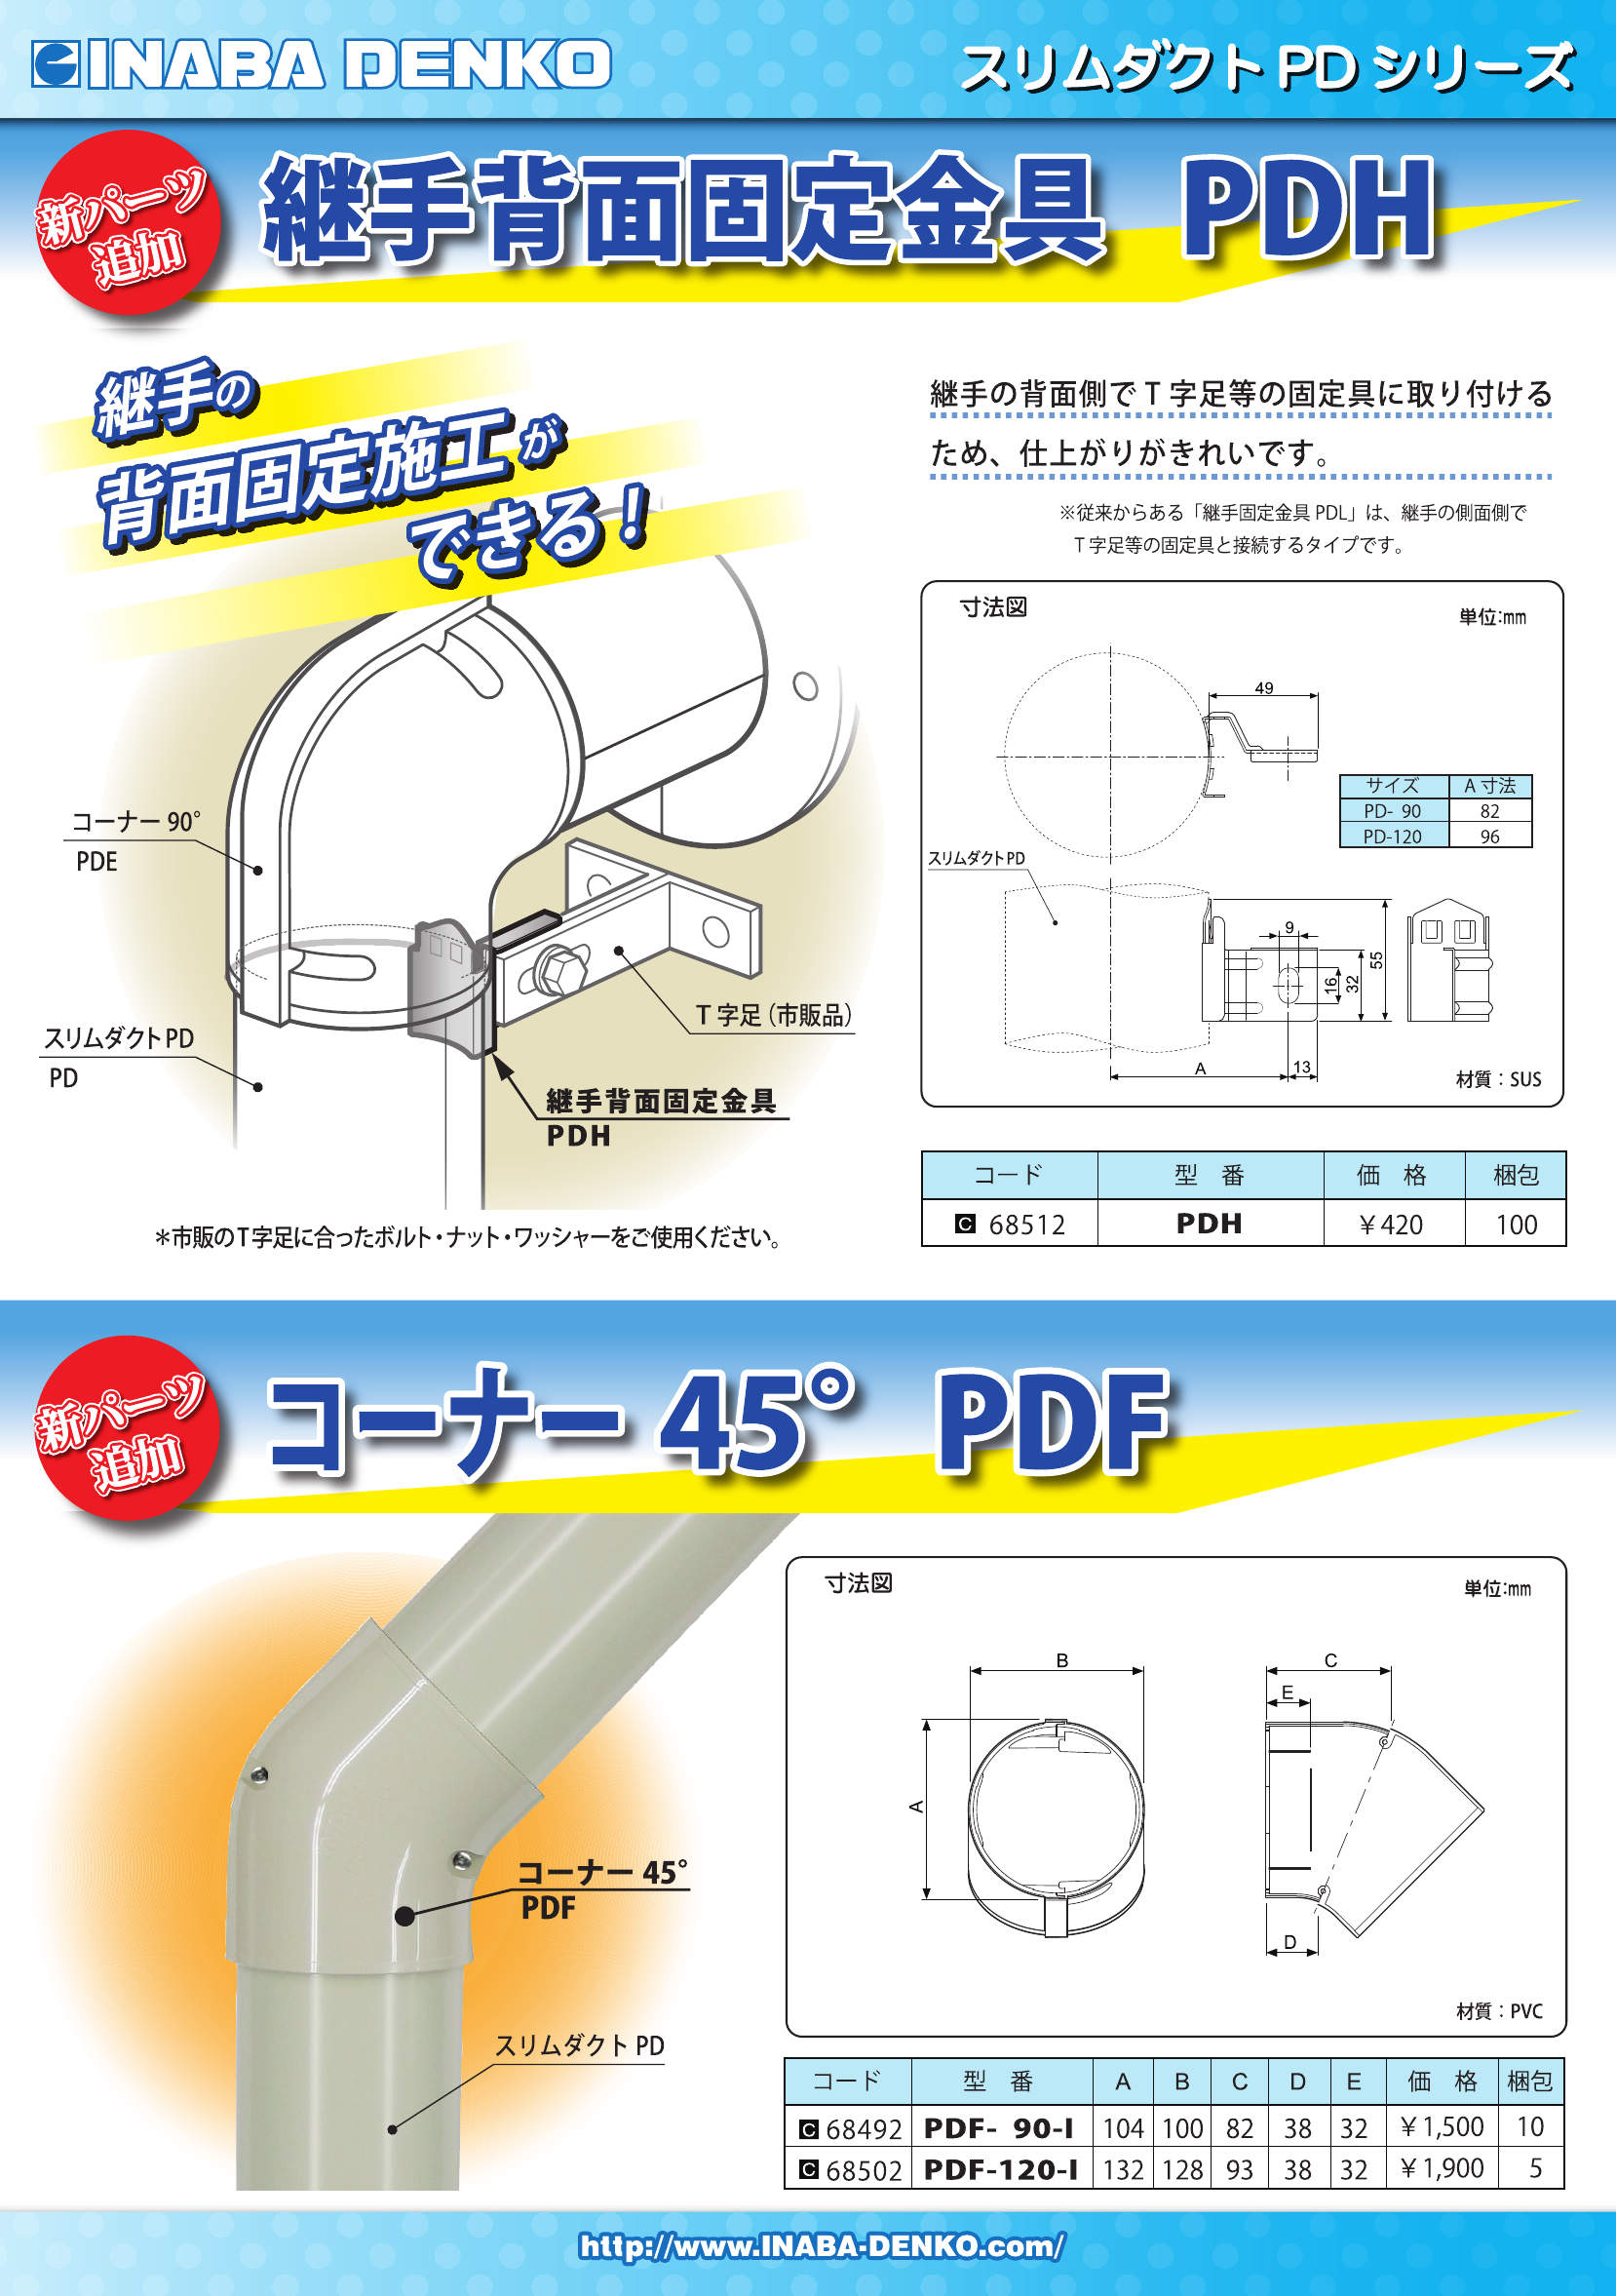 PDF_PDH_製品パンフレット_20130319.pdf